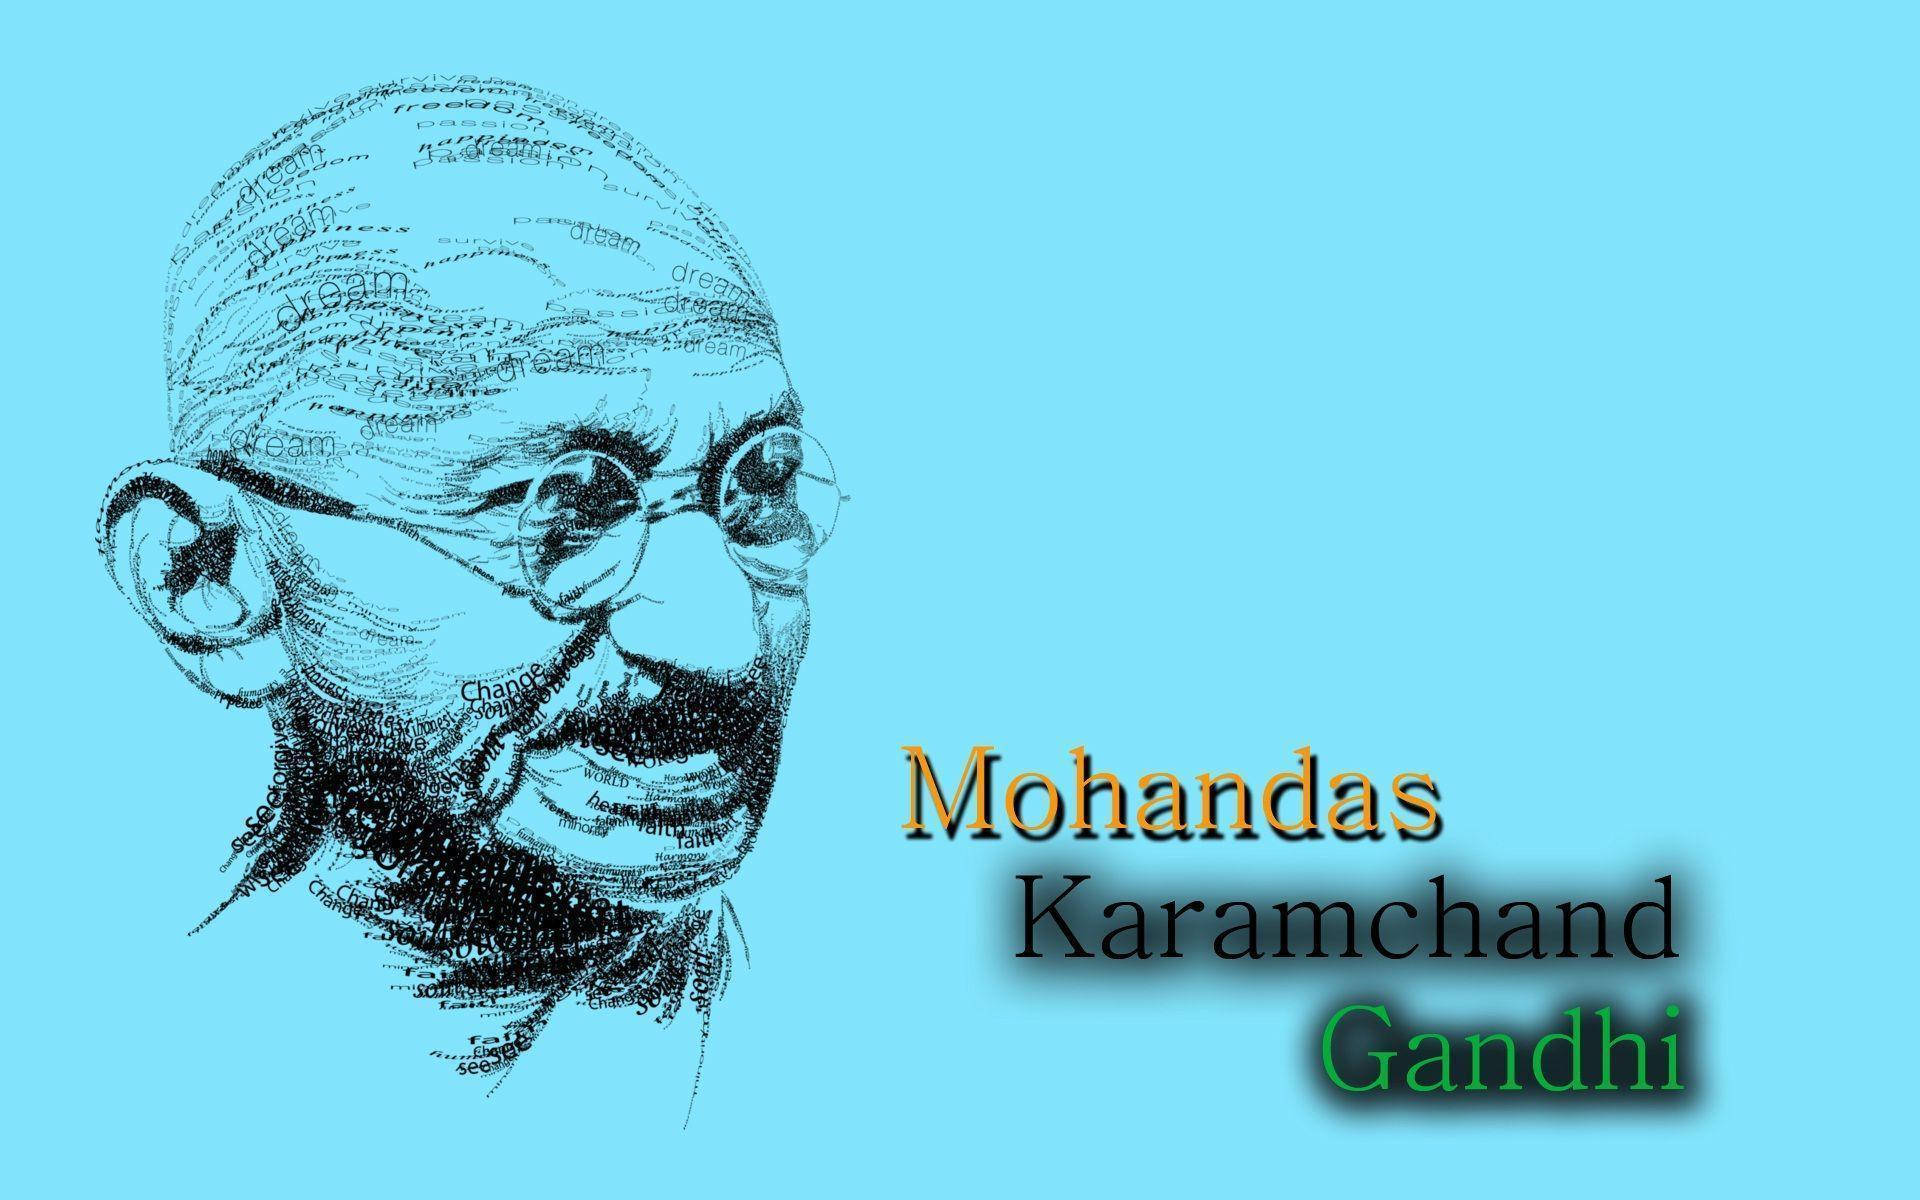 Mahatma Gandhi Monochrome Portrait Background